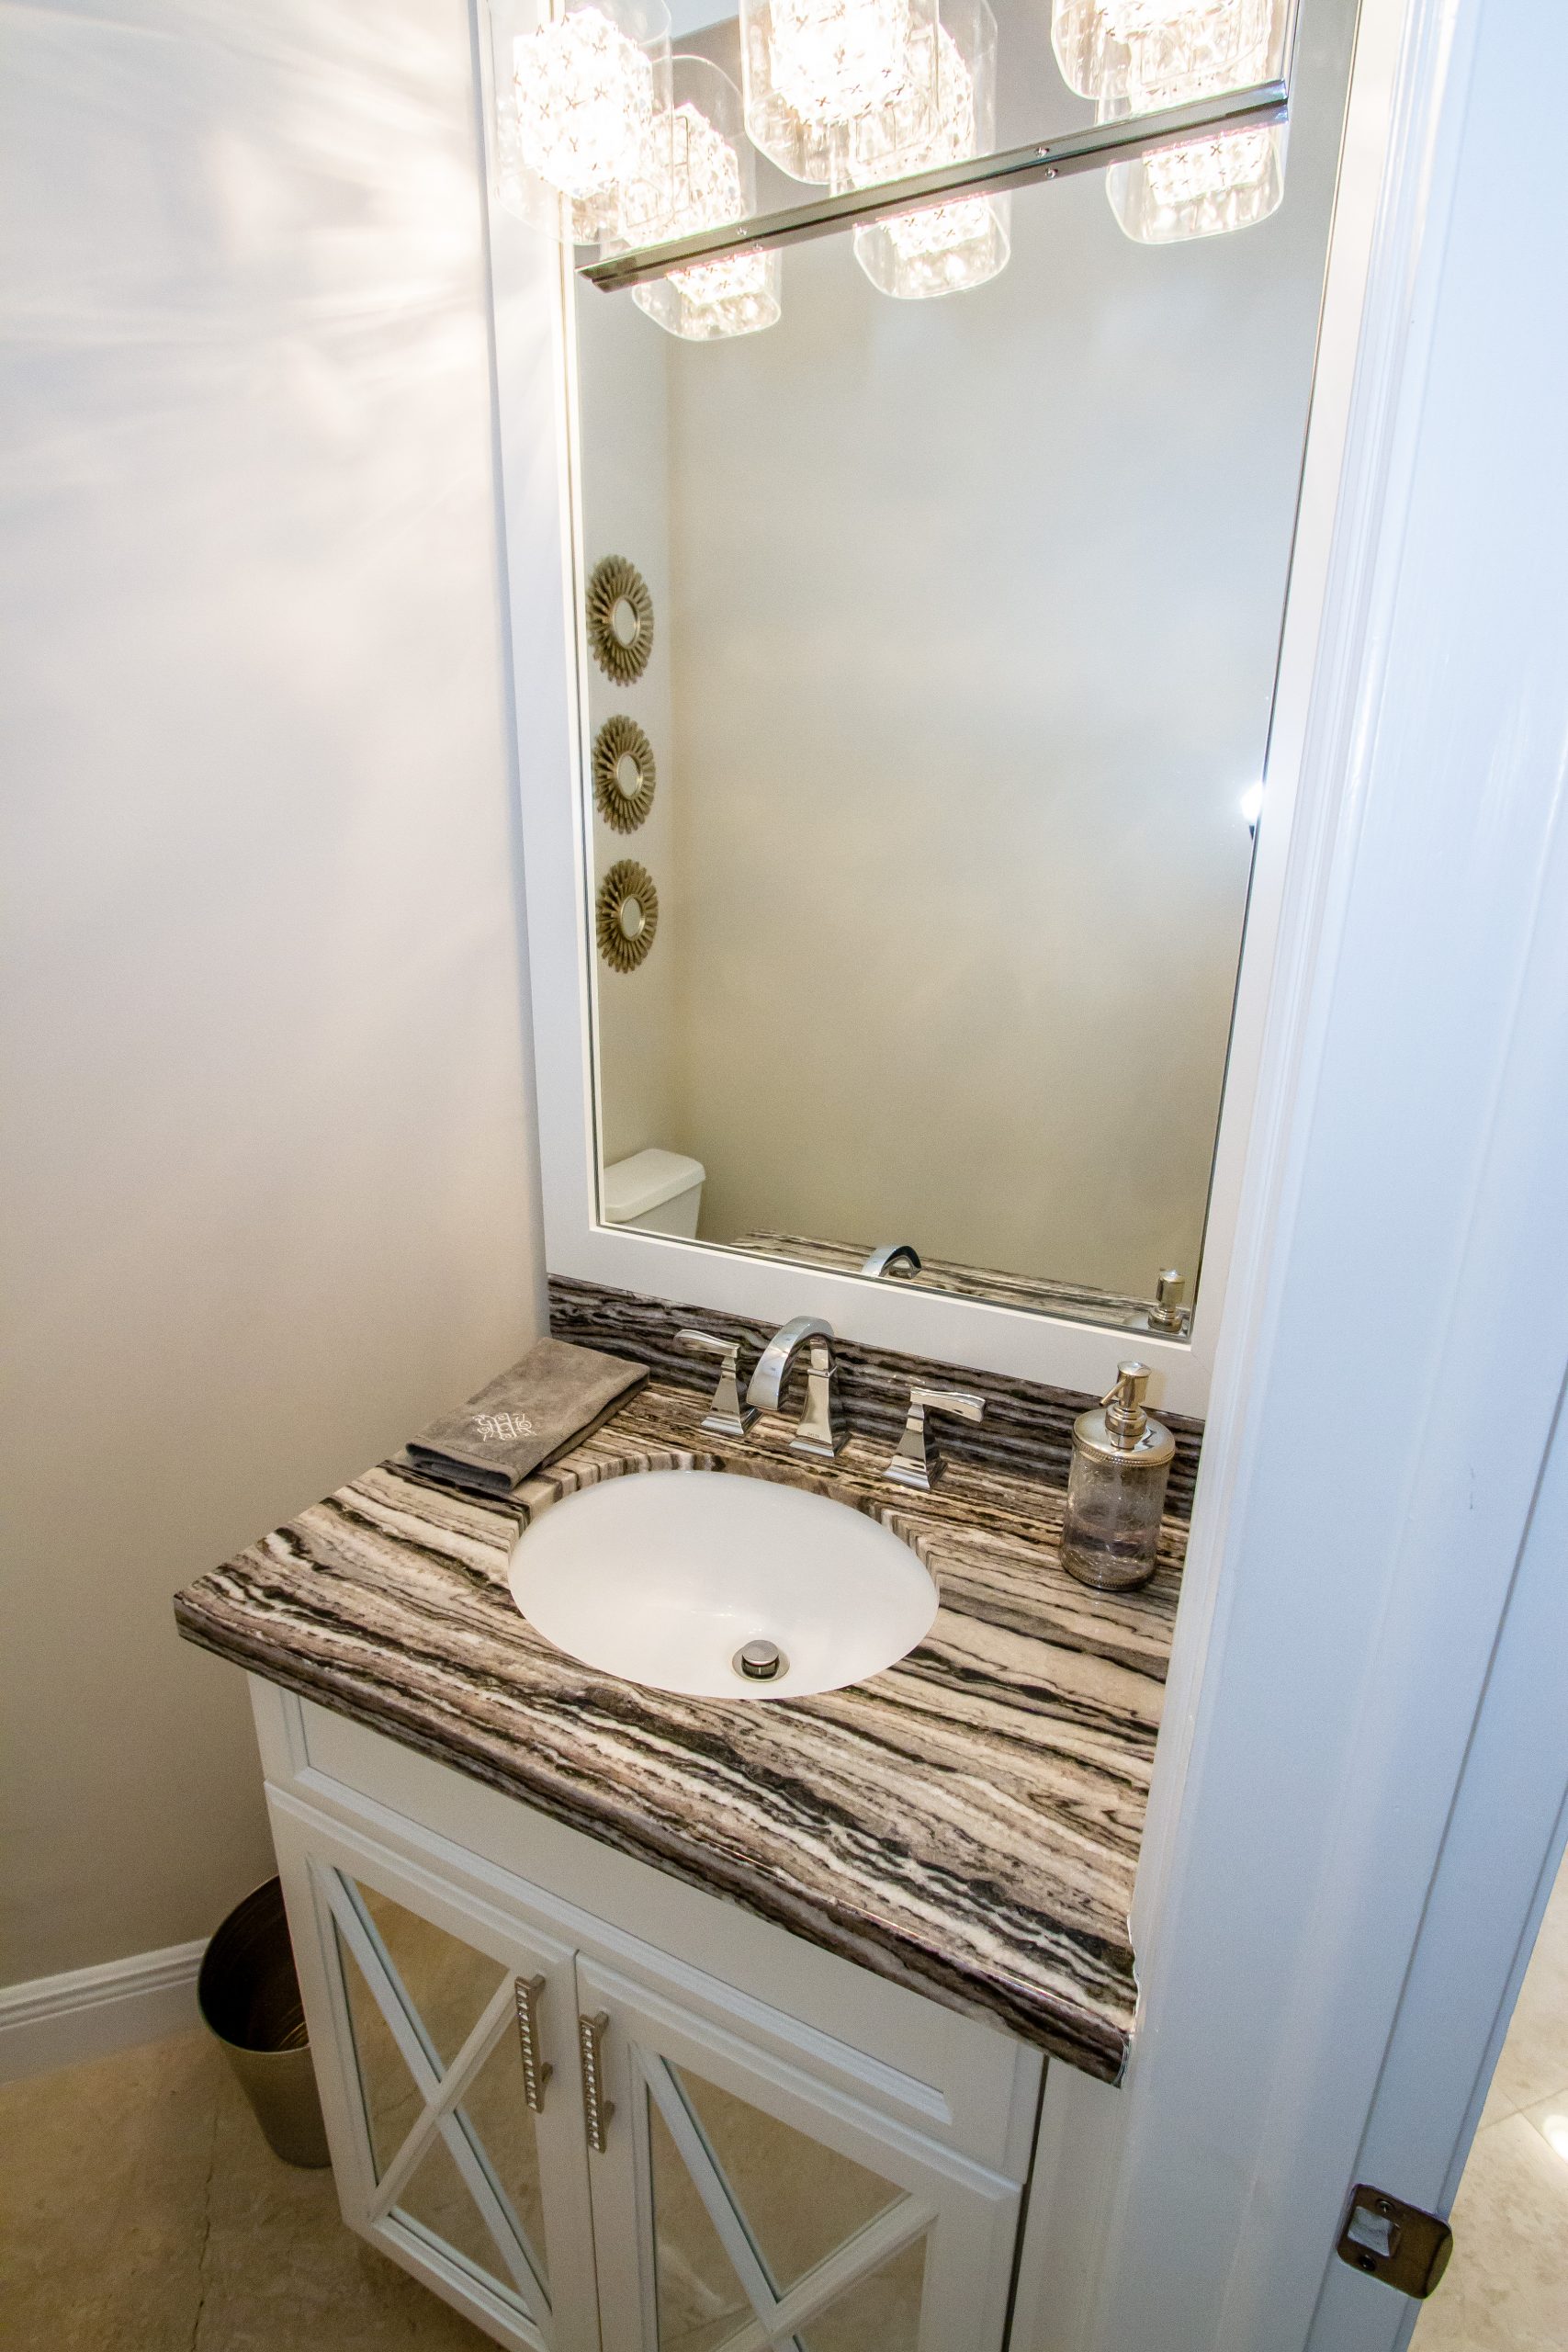 Striped granite bathroom vanity countertops